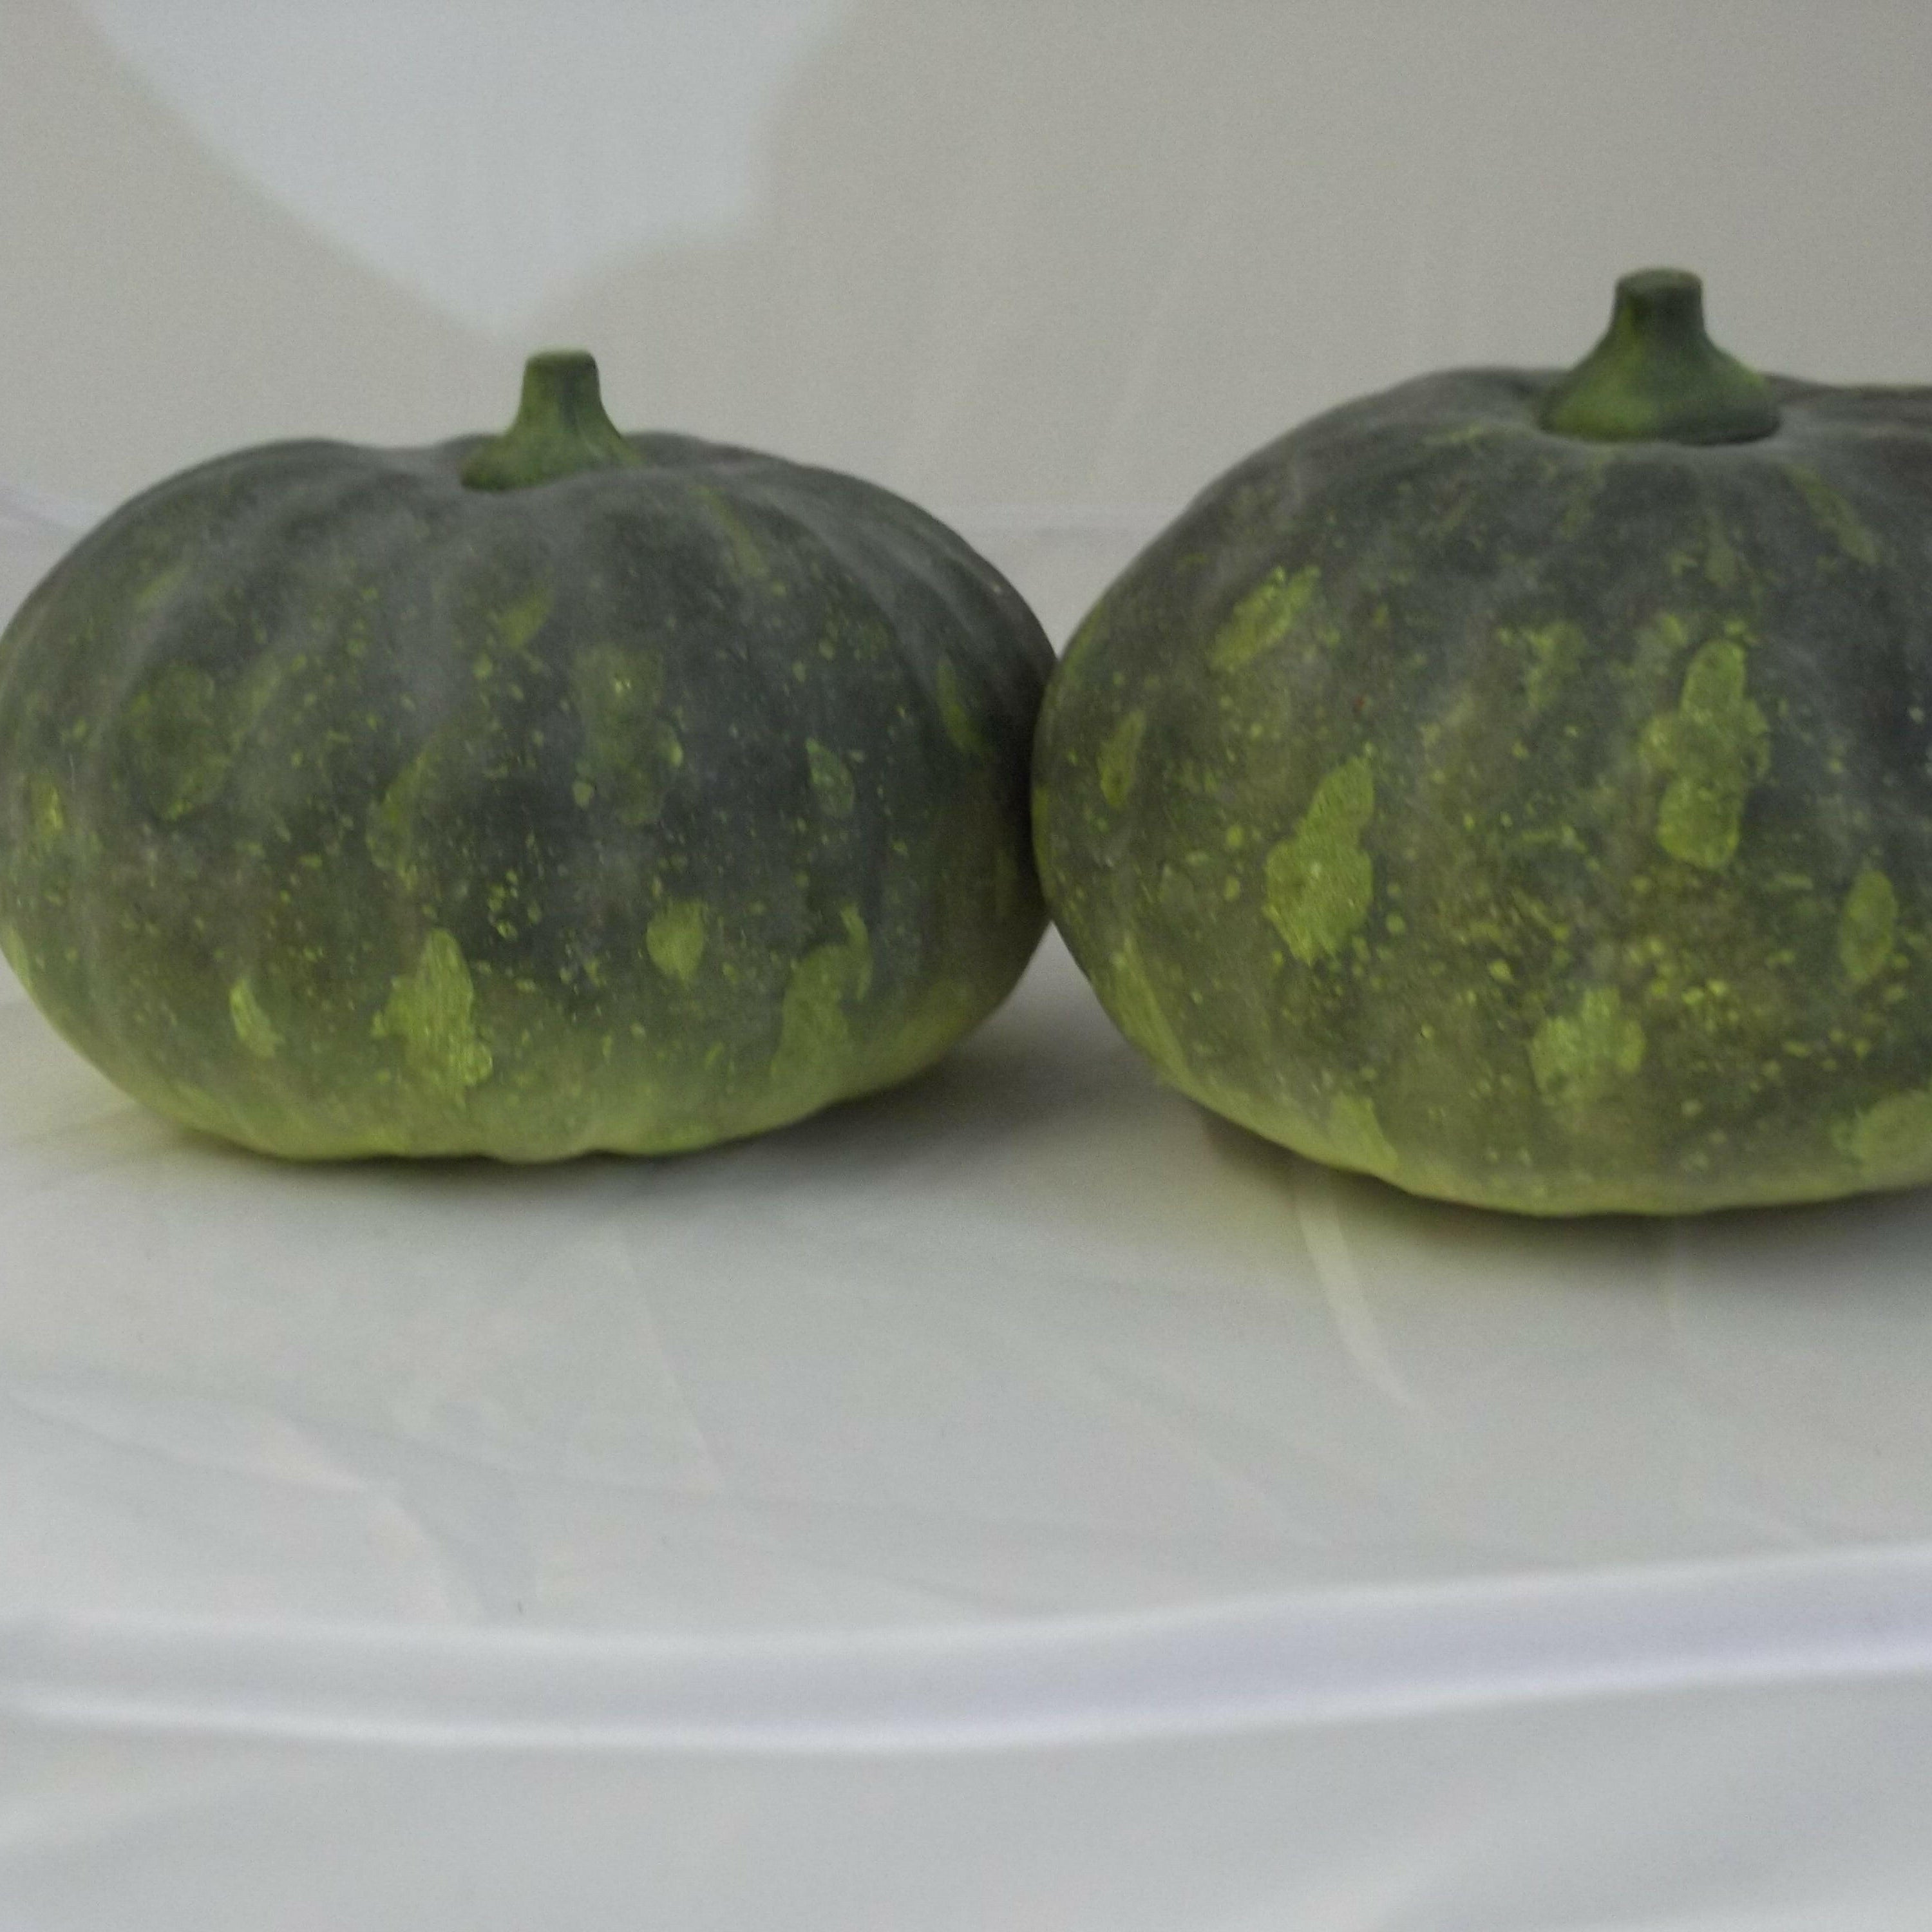 Artificial Pumpkins - a pair of